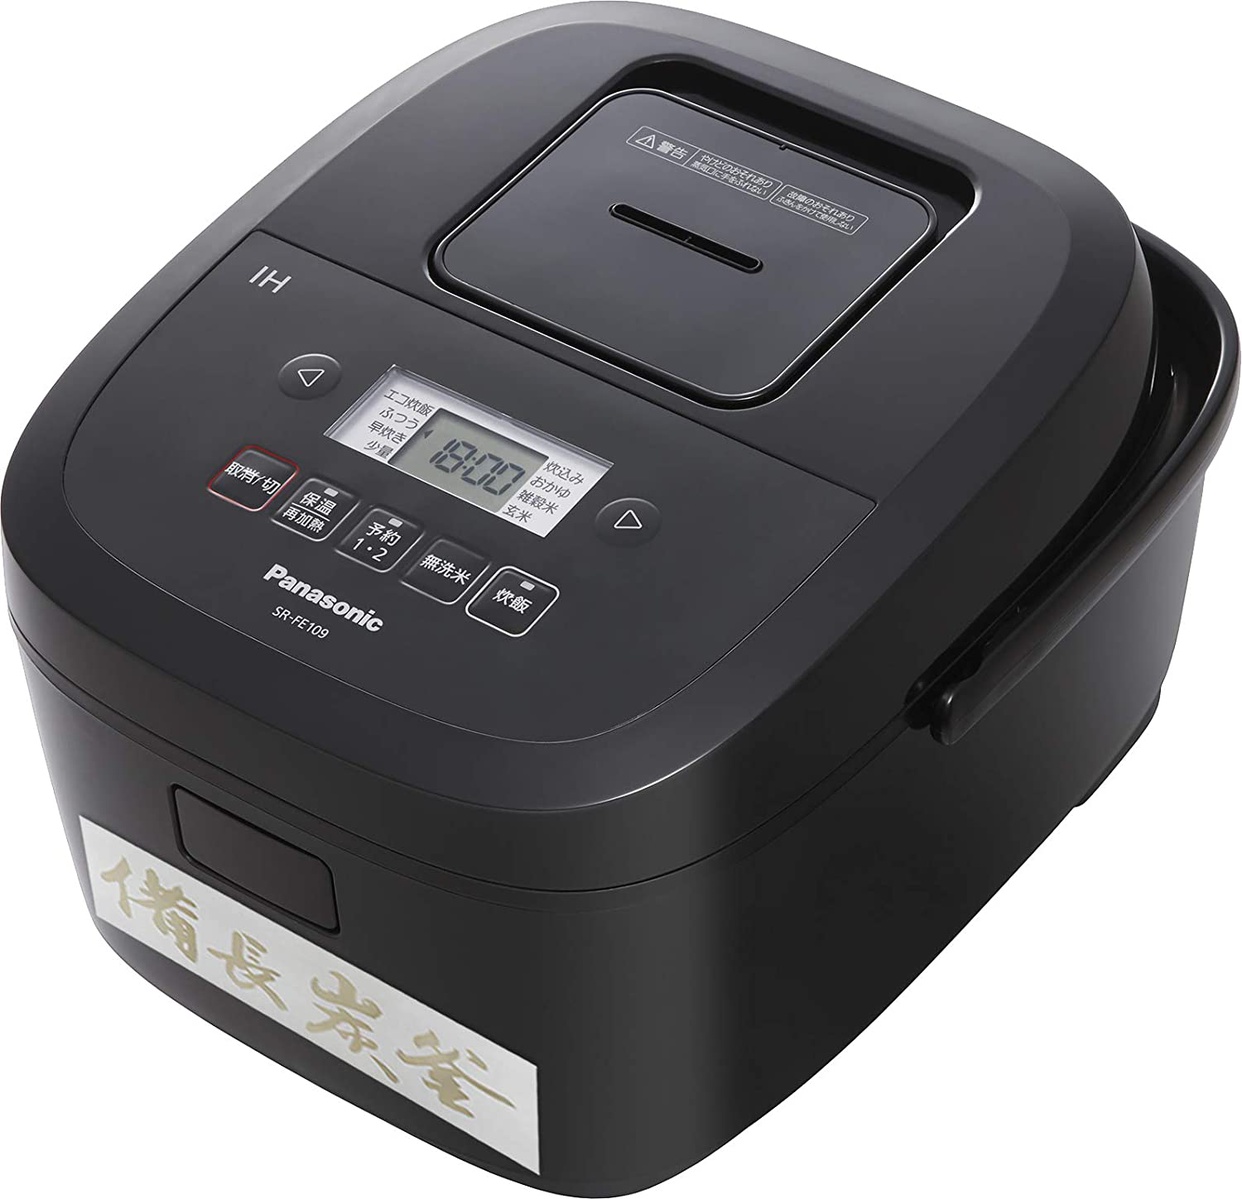 Panasonic(パナソニック) IHジャー炊飯器 SR-FE109の商品画像1 